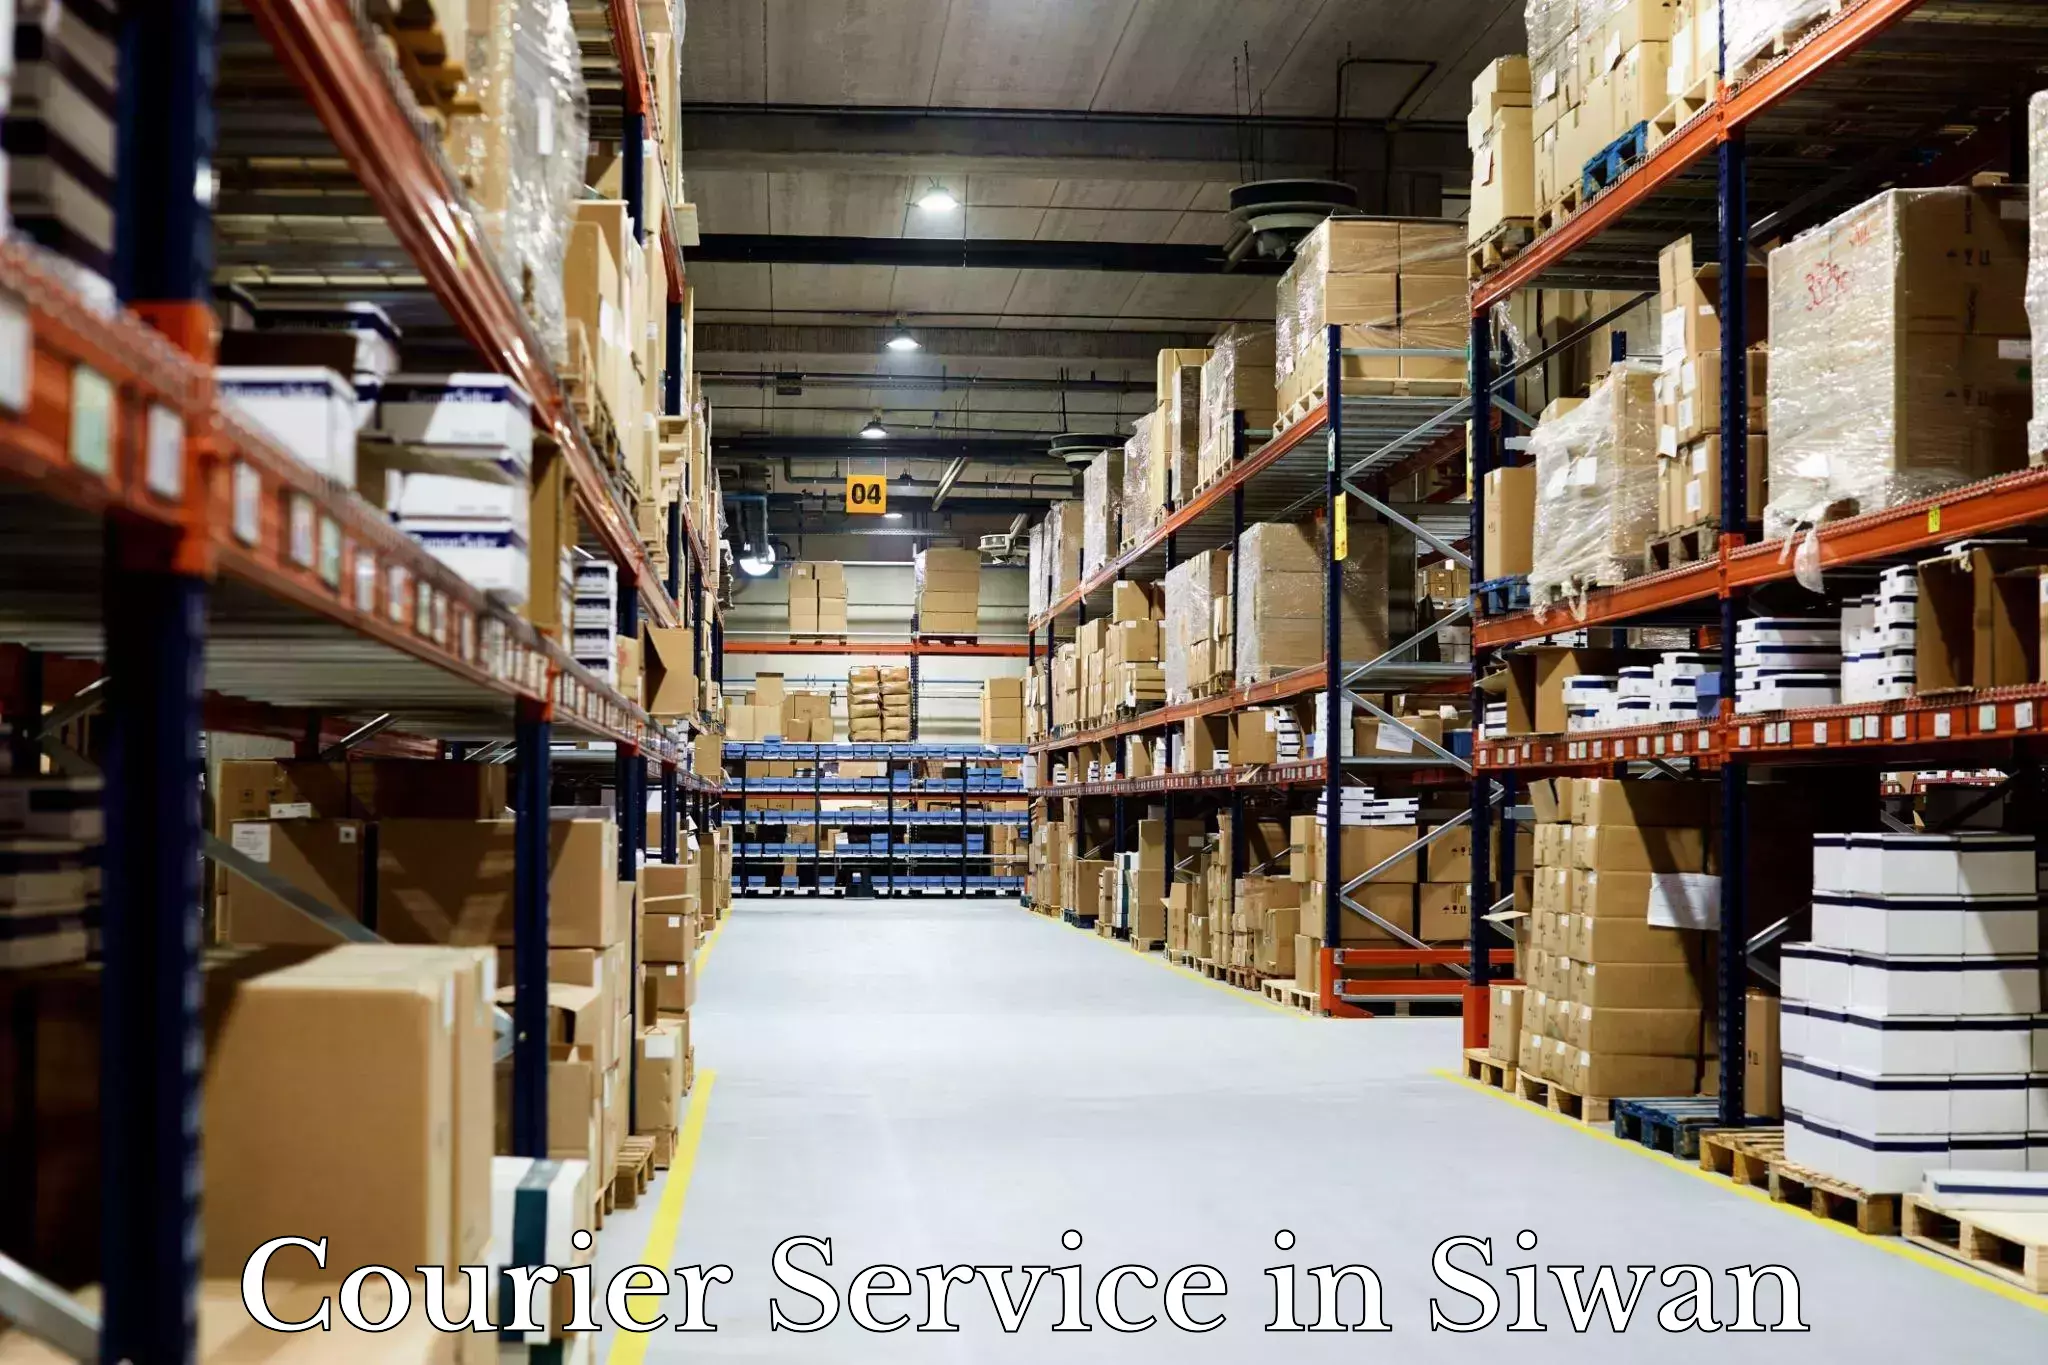 Specialized shipment handling in Siwan